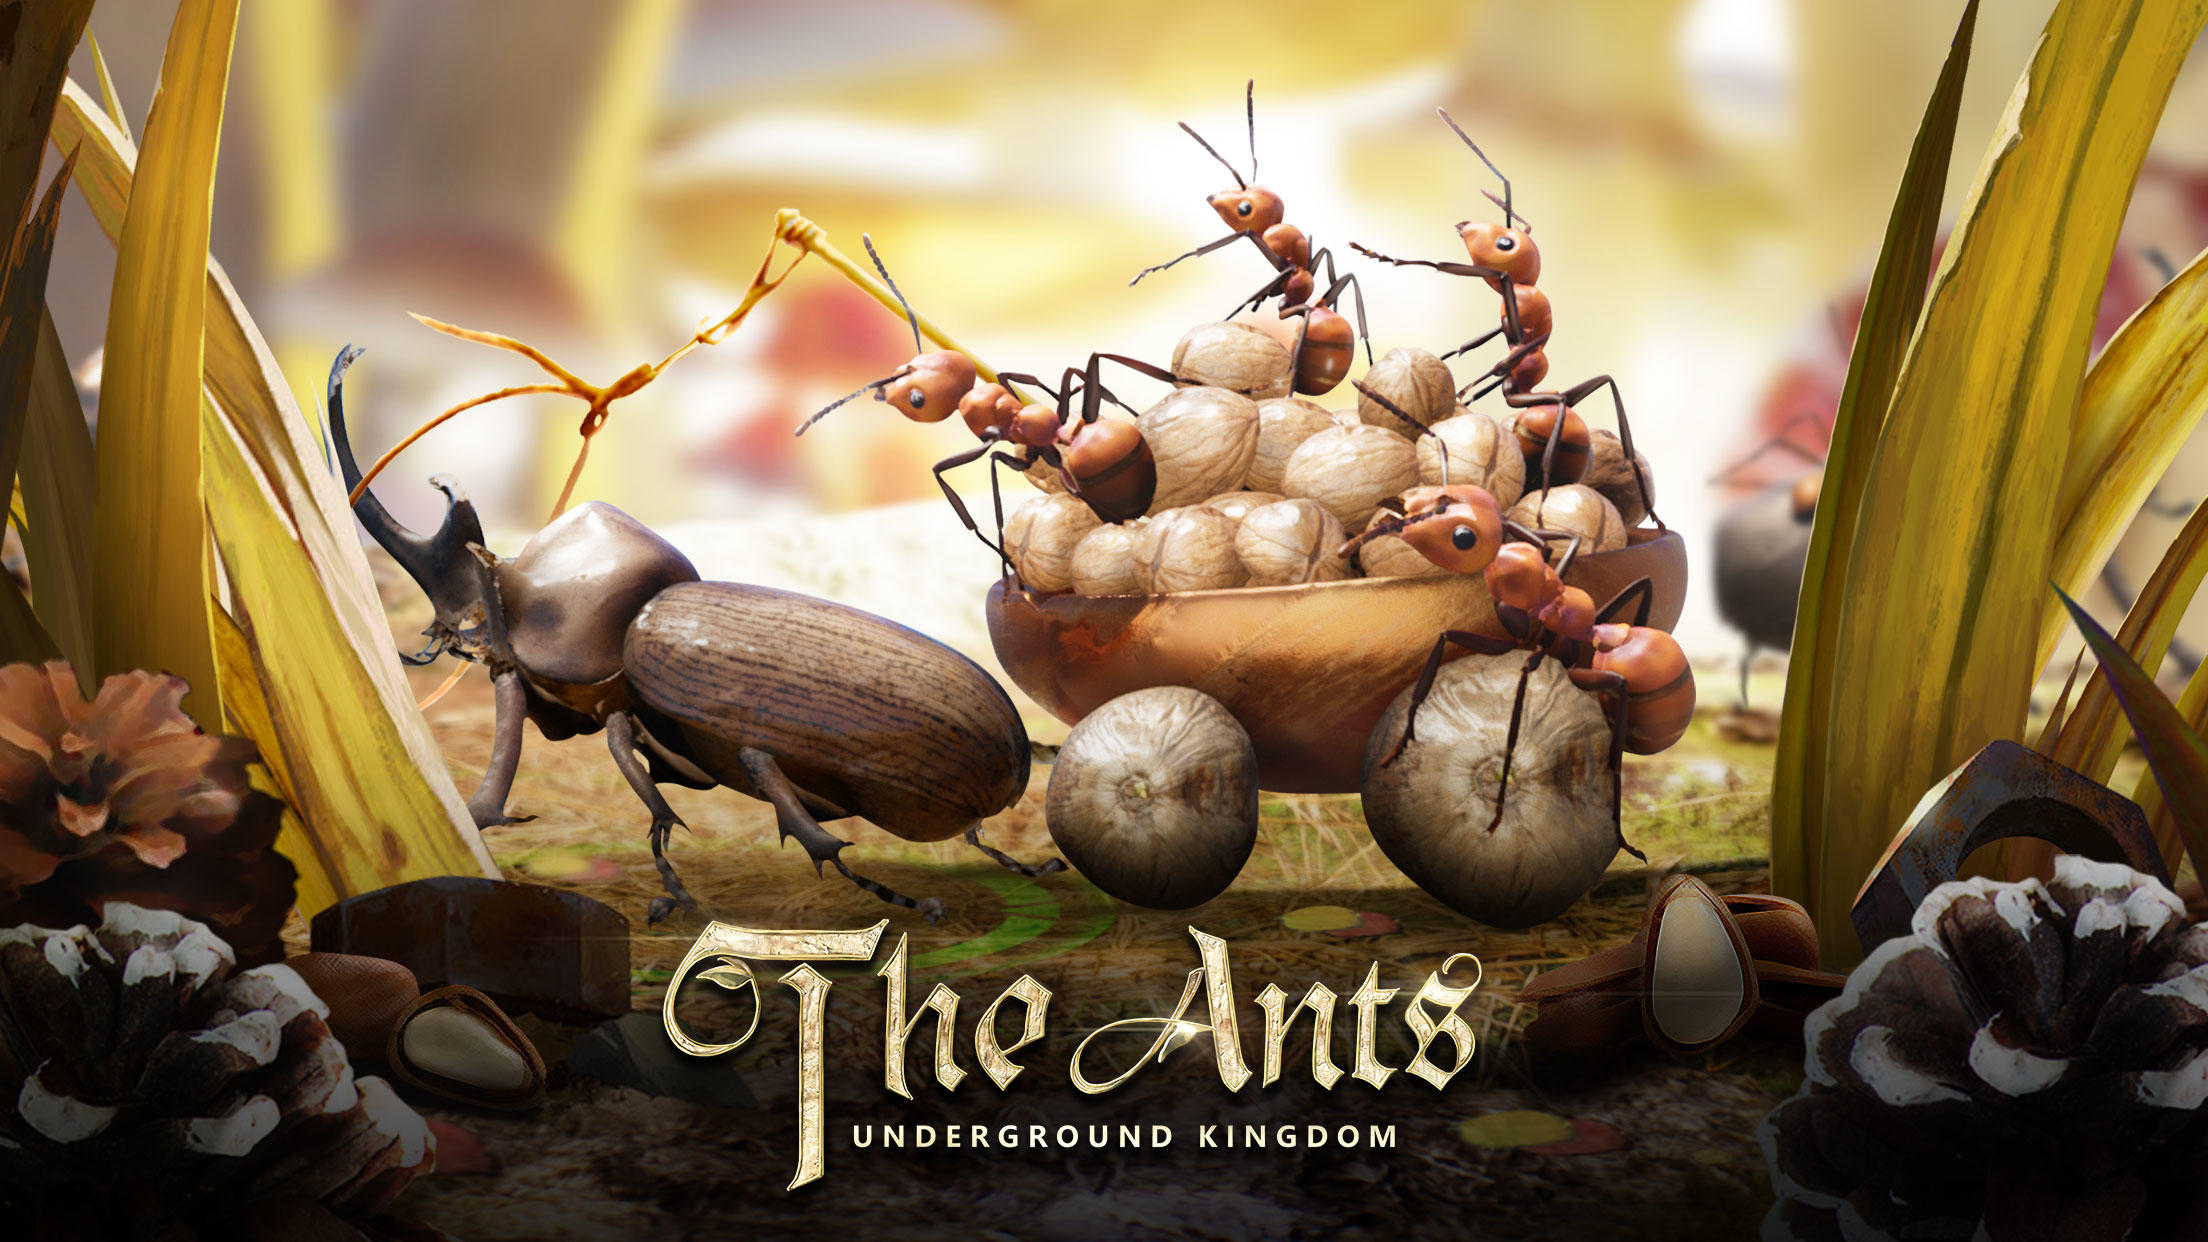 Screenshot 1 of 개미: 지하 왕국 3.43.0